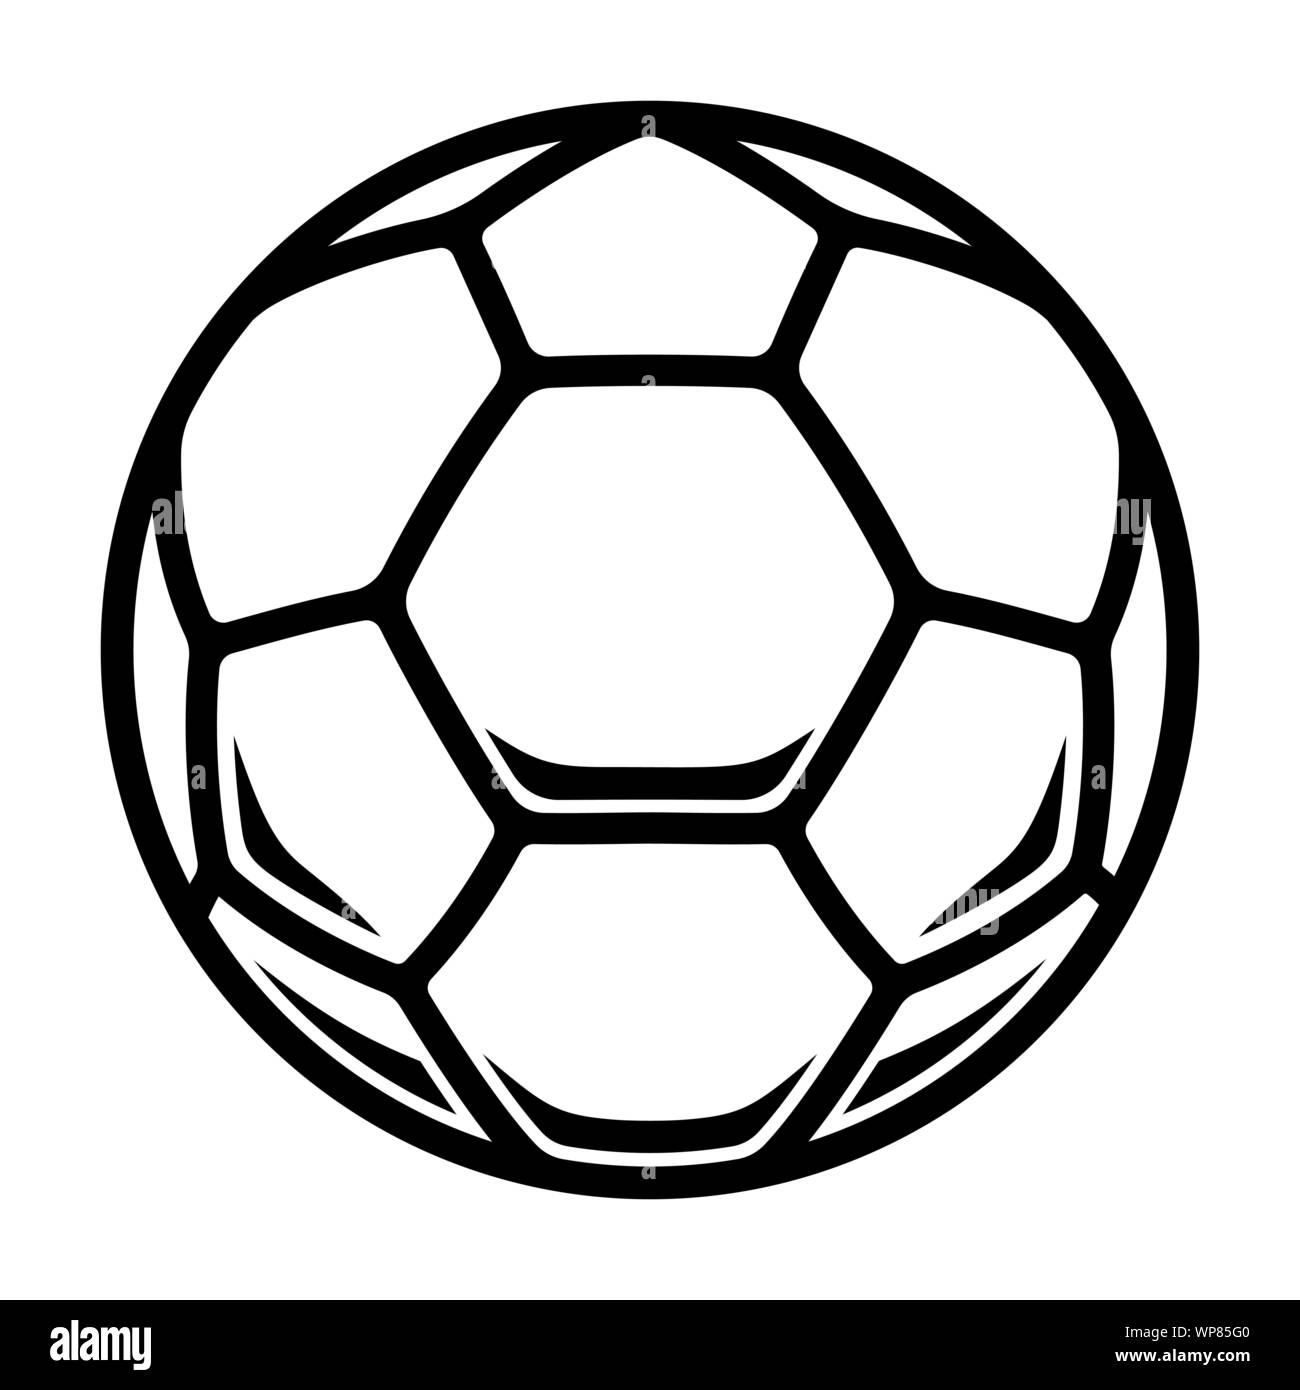 Soccer ball icon. European football ball. Black and white vector  illustration Stock Vector Image & Art - Alamy